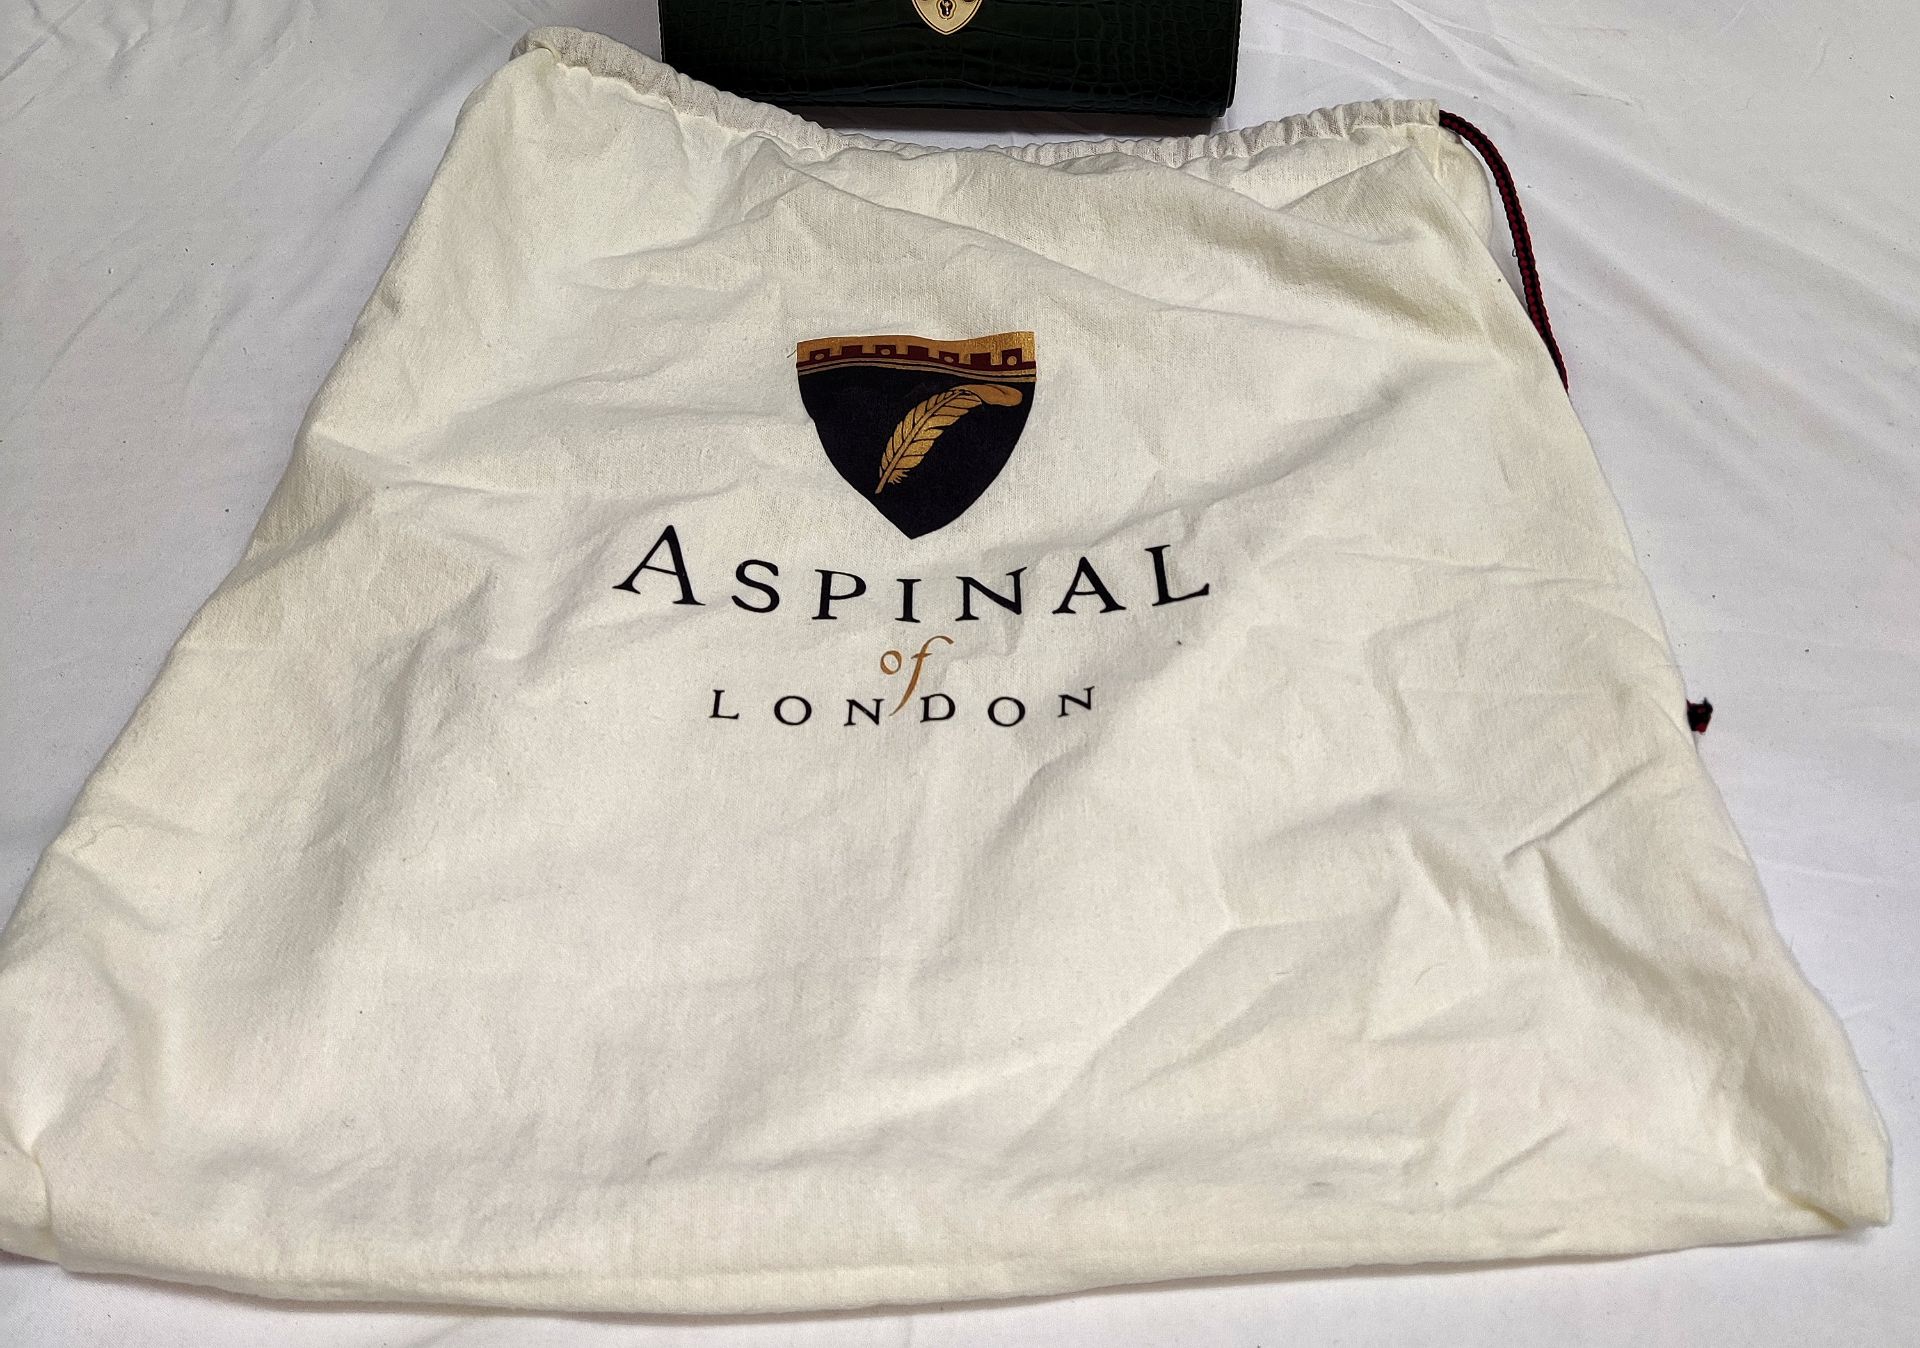 1 x ASPINAL OF LONDON Mayfair Bag - Evergreen Patent Croc - Original RRP £695.00 - Image 17 of 23